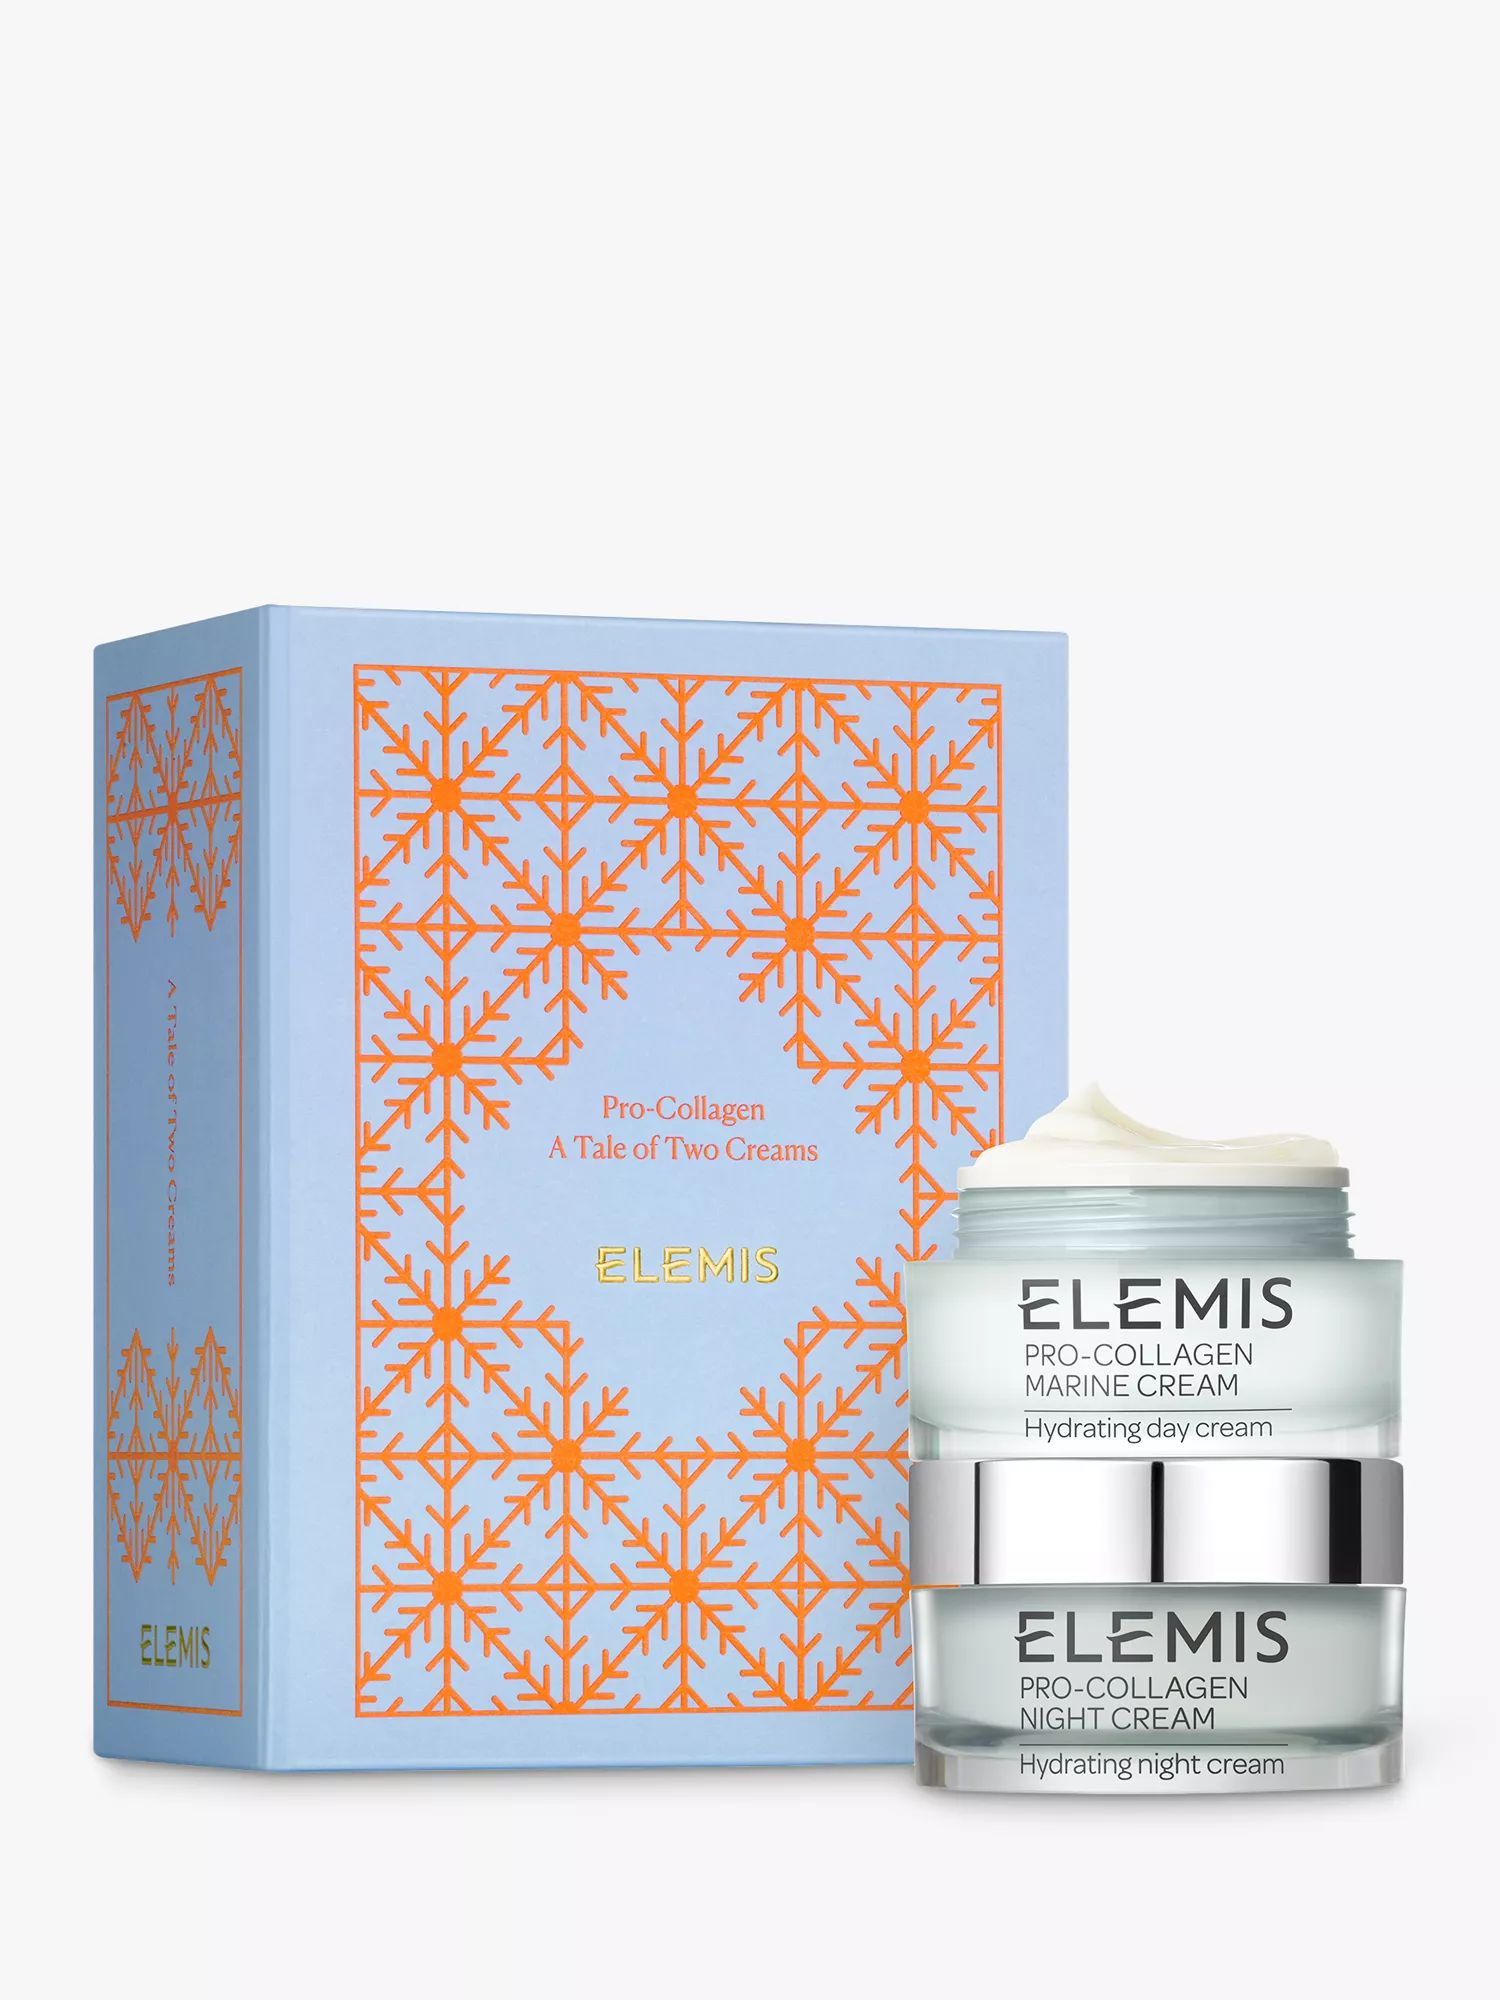 Elemis Pro-Collagen A Tale of two Creams Skincare Gift Set | John Lewis (UK)